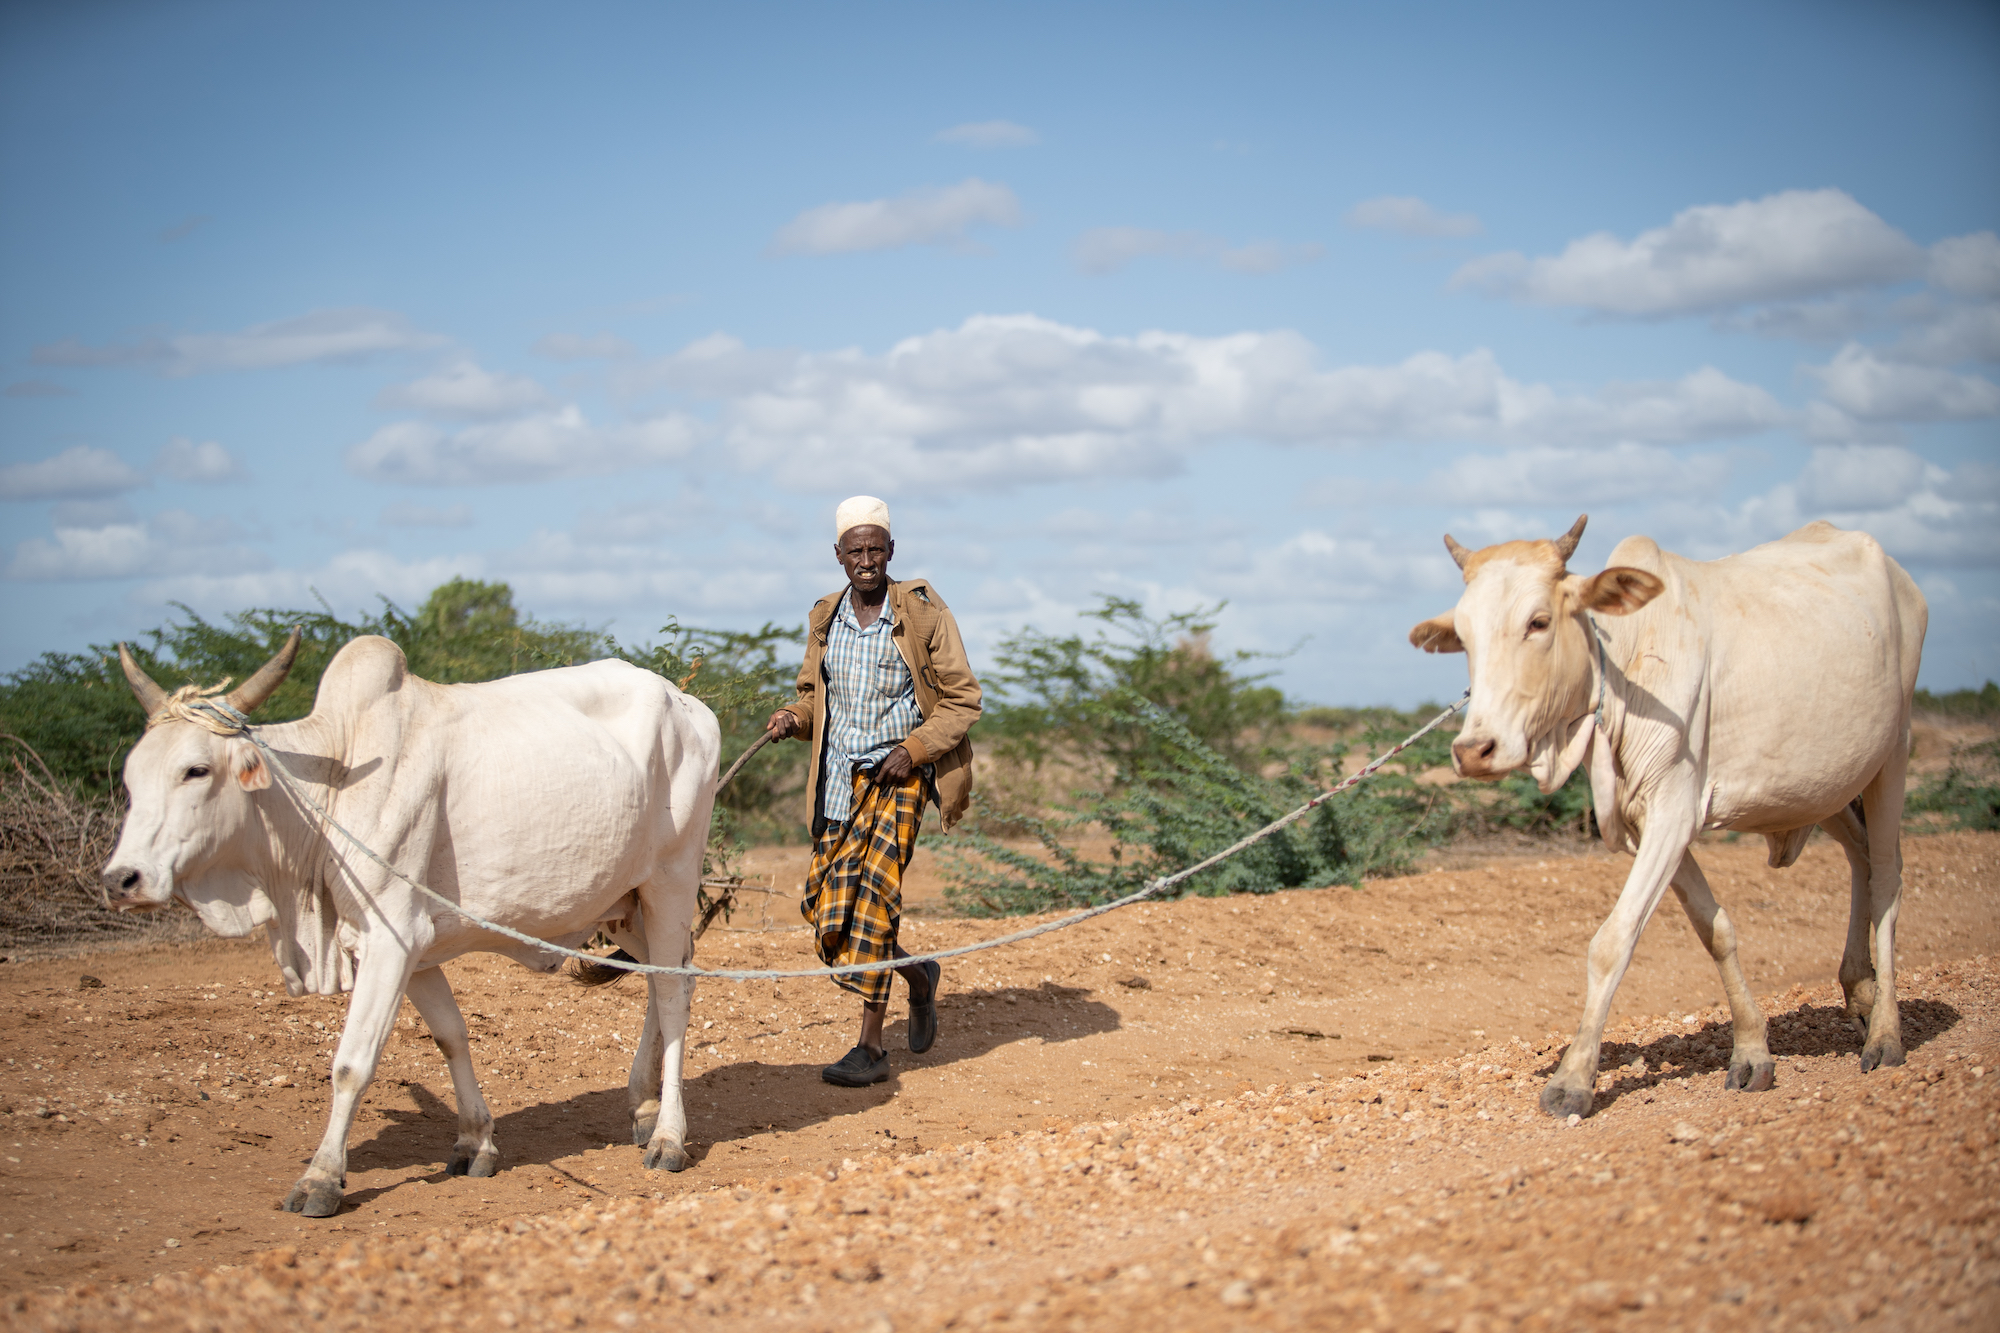 Arri Kote Kumbi walks with cattle down a dusty path in Matanya village, Tana River County in Eastern Kenya